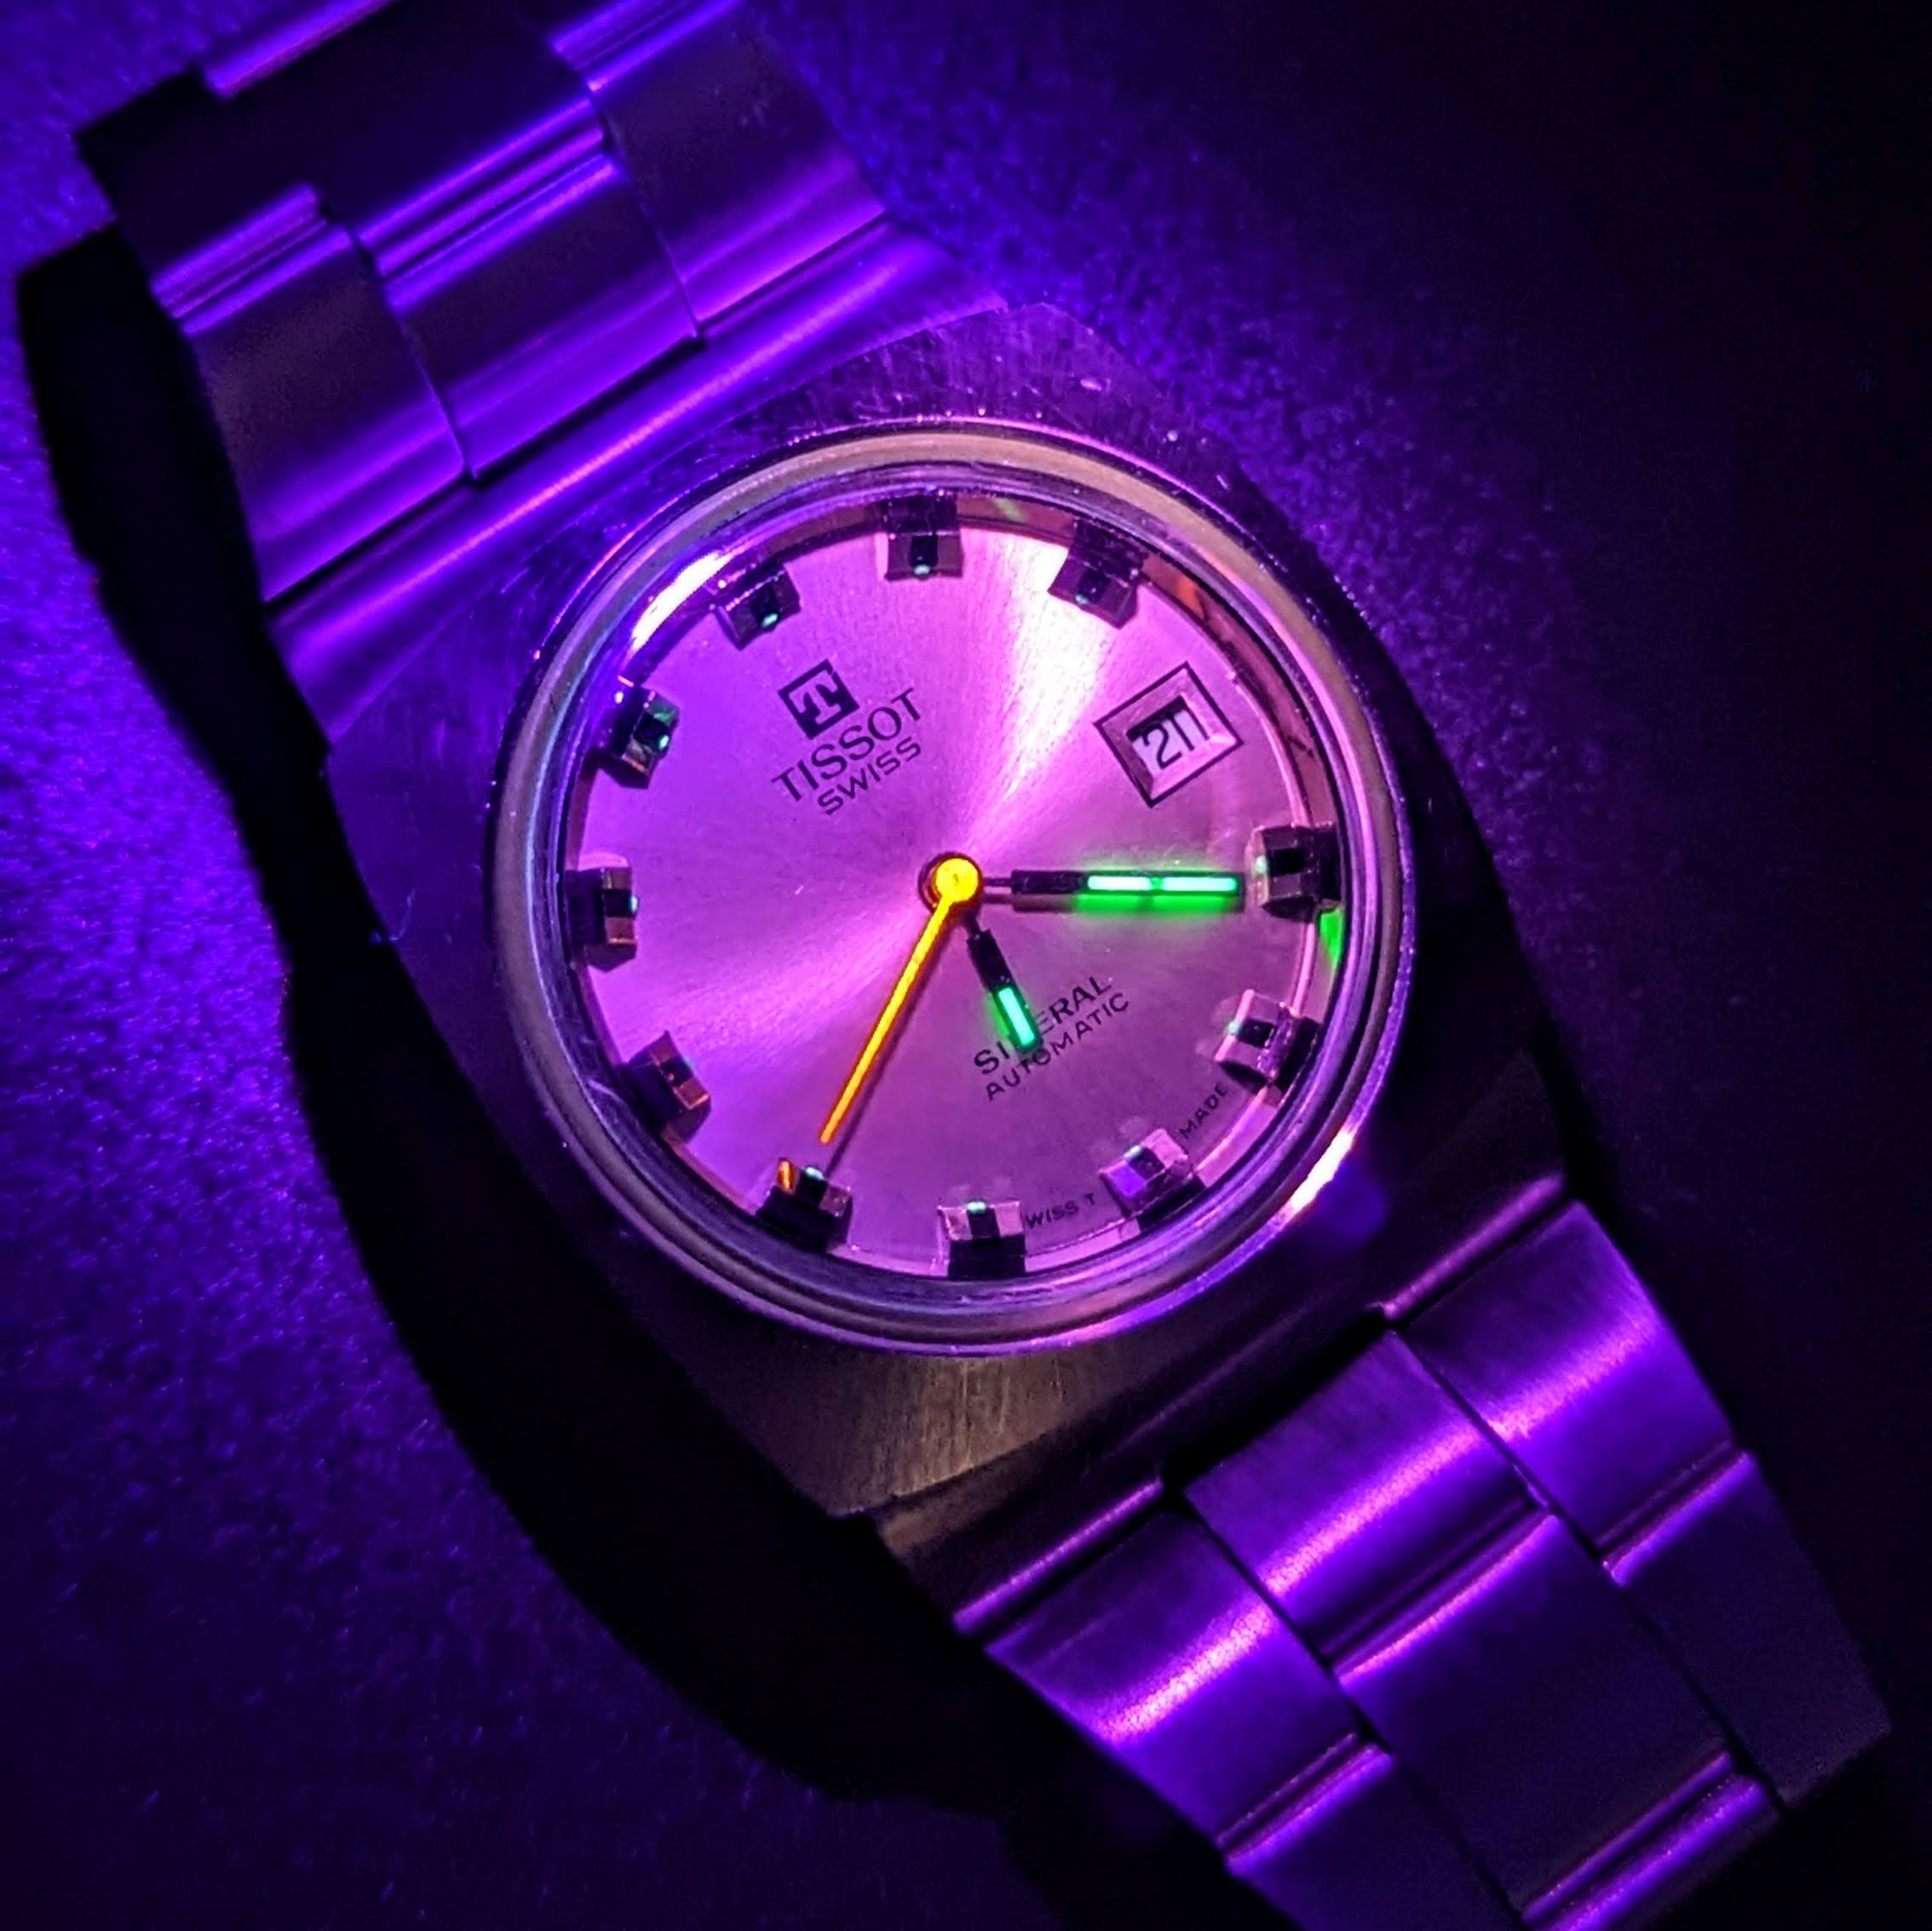 TISSOT Sideral Automatic Watch Date Indicator Vintage Wristwatch Original Bracelet